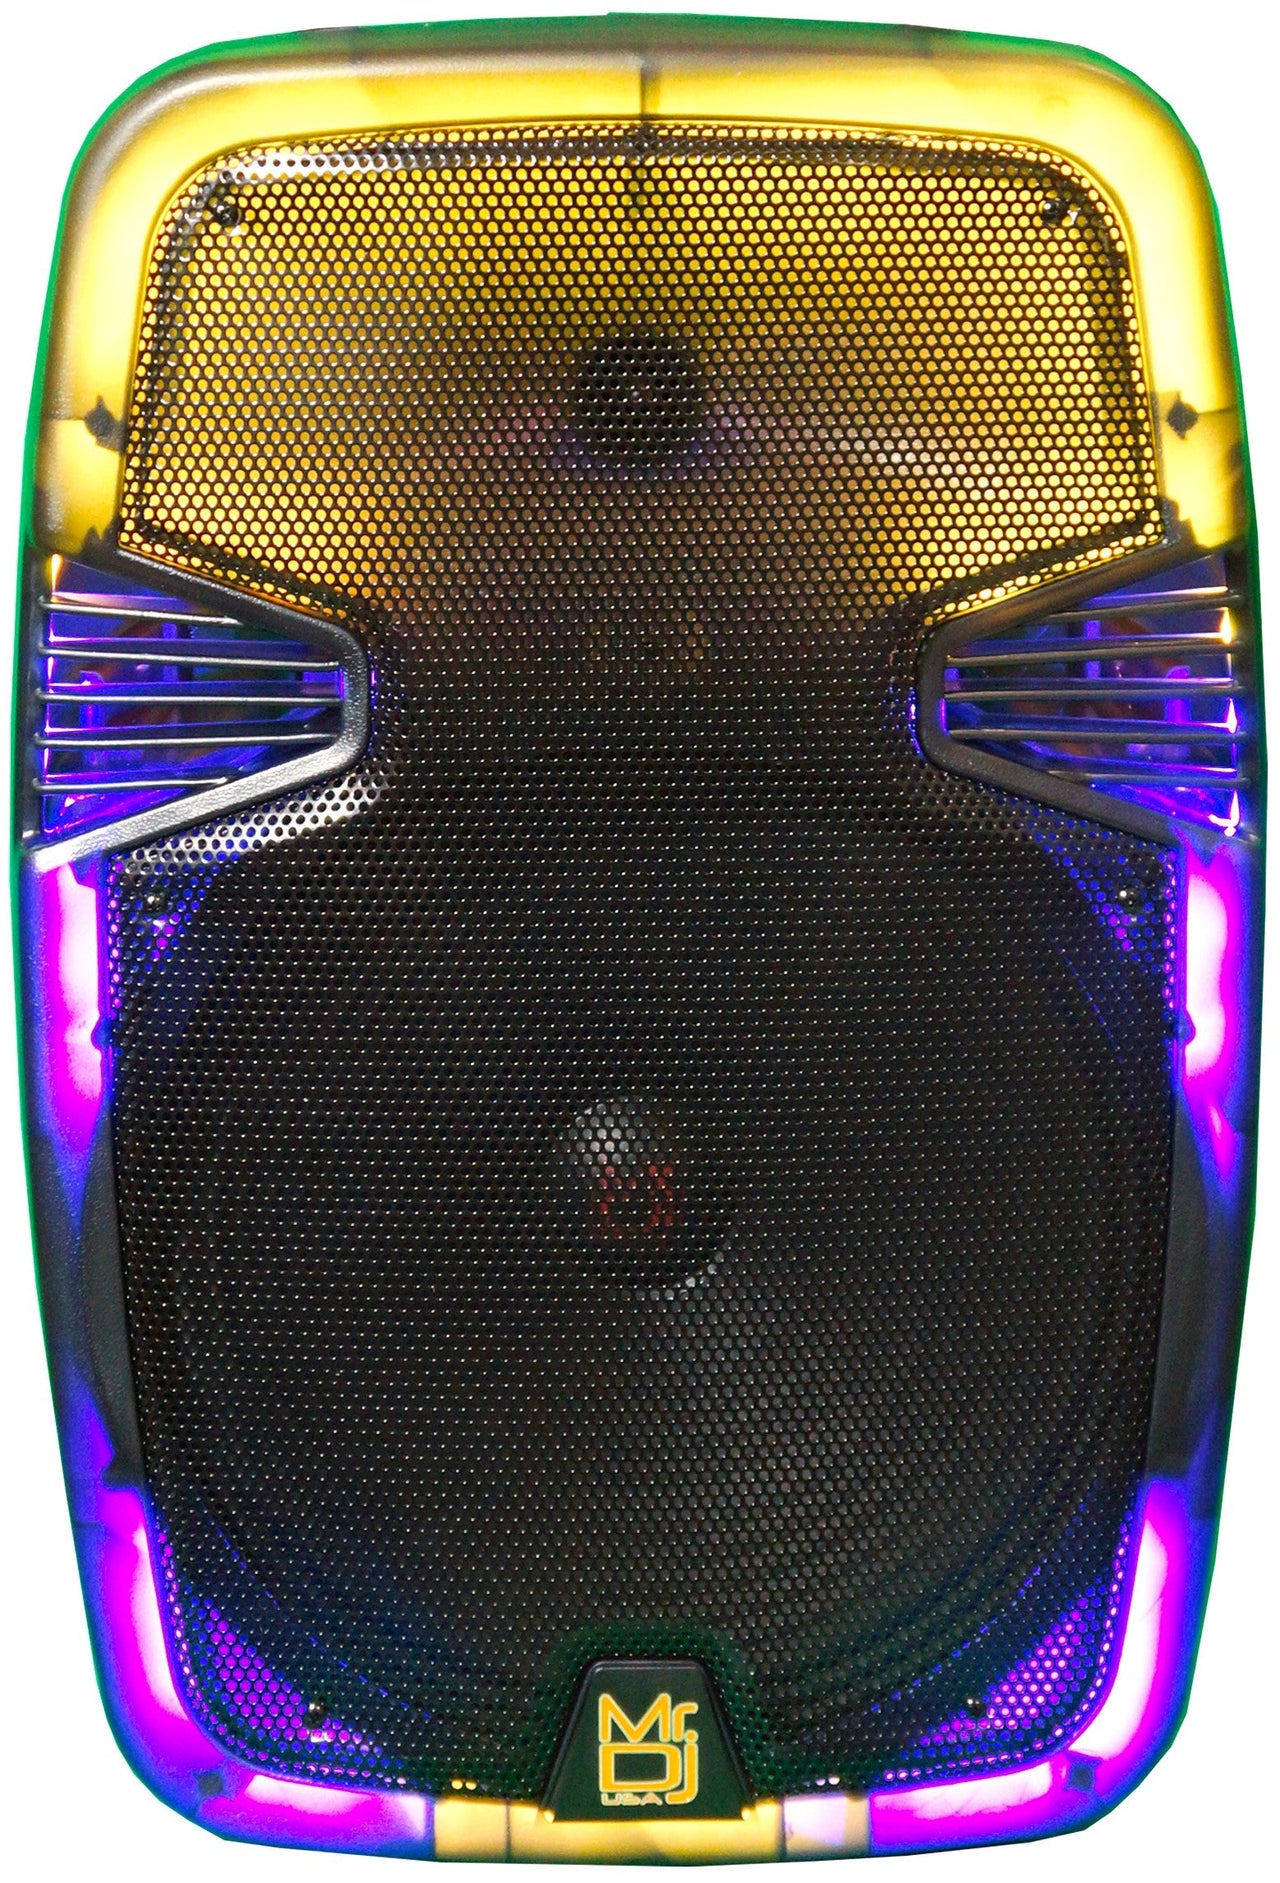 2 MR DJ PL15FLAME 15" Portable Translucent Bluetooth Speaker